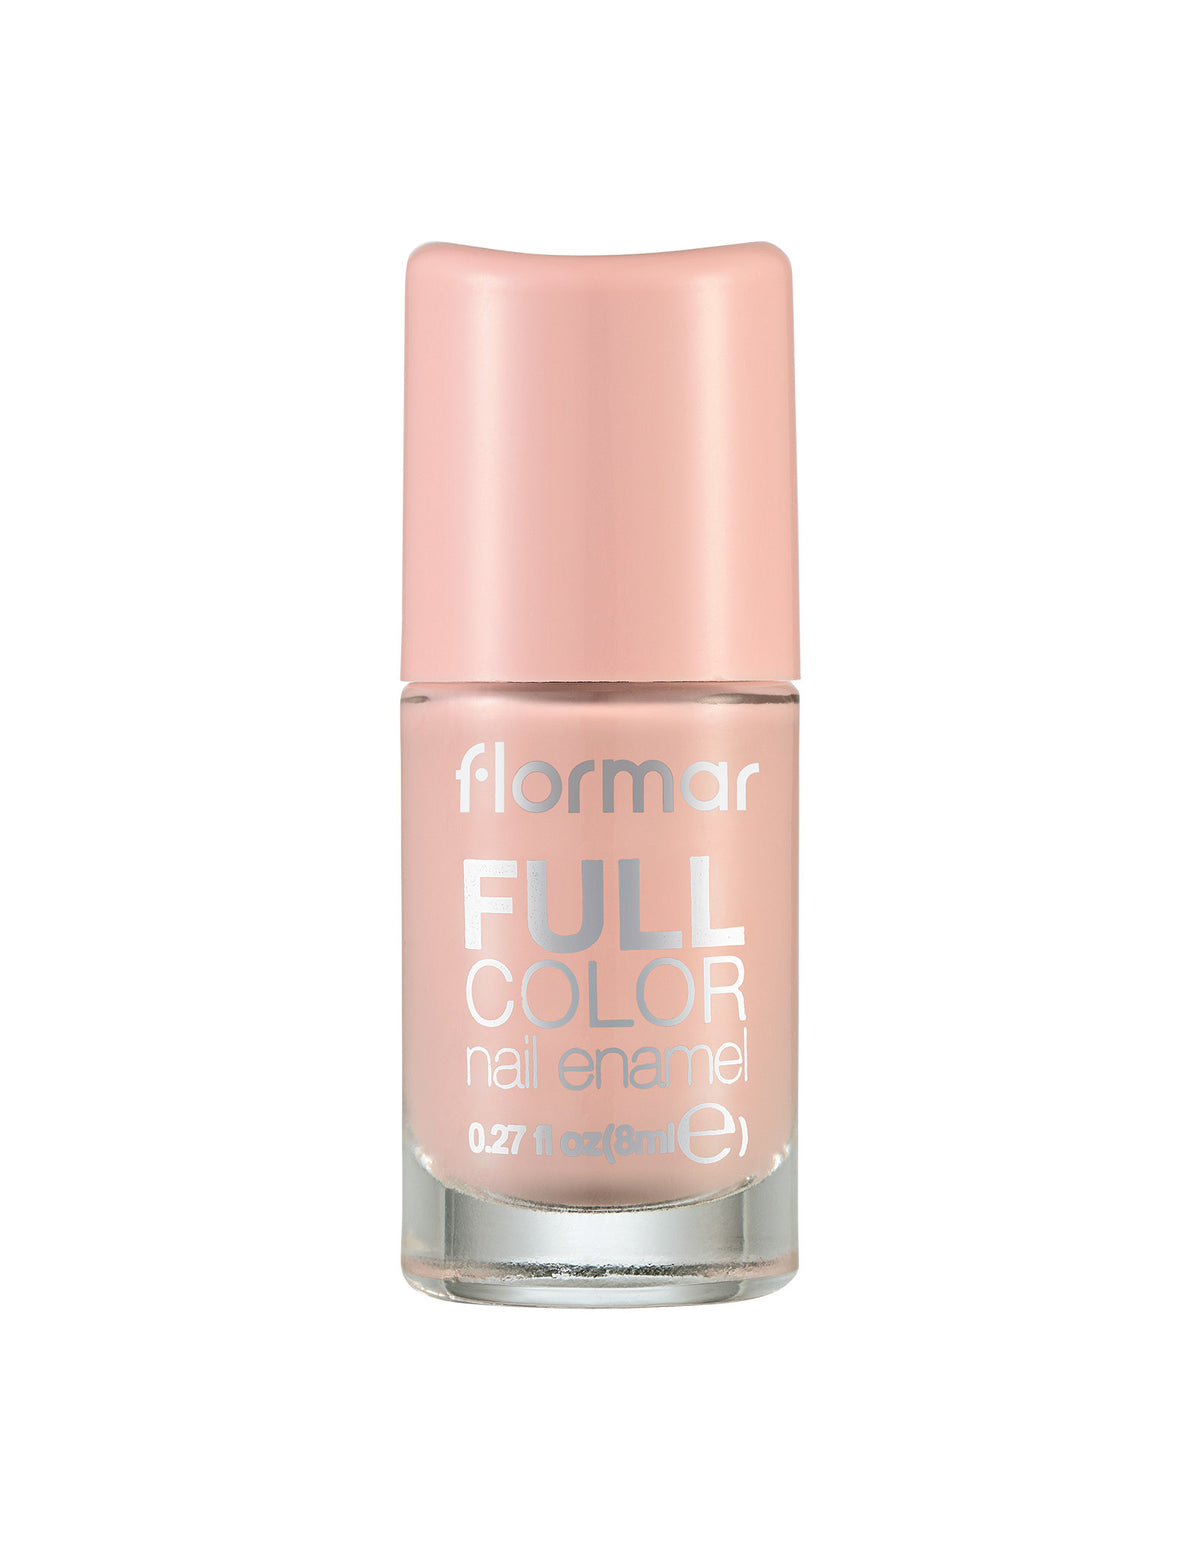 Flormar Full Color Nail Enamel